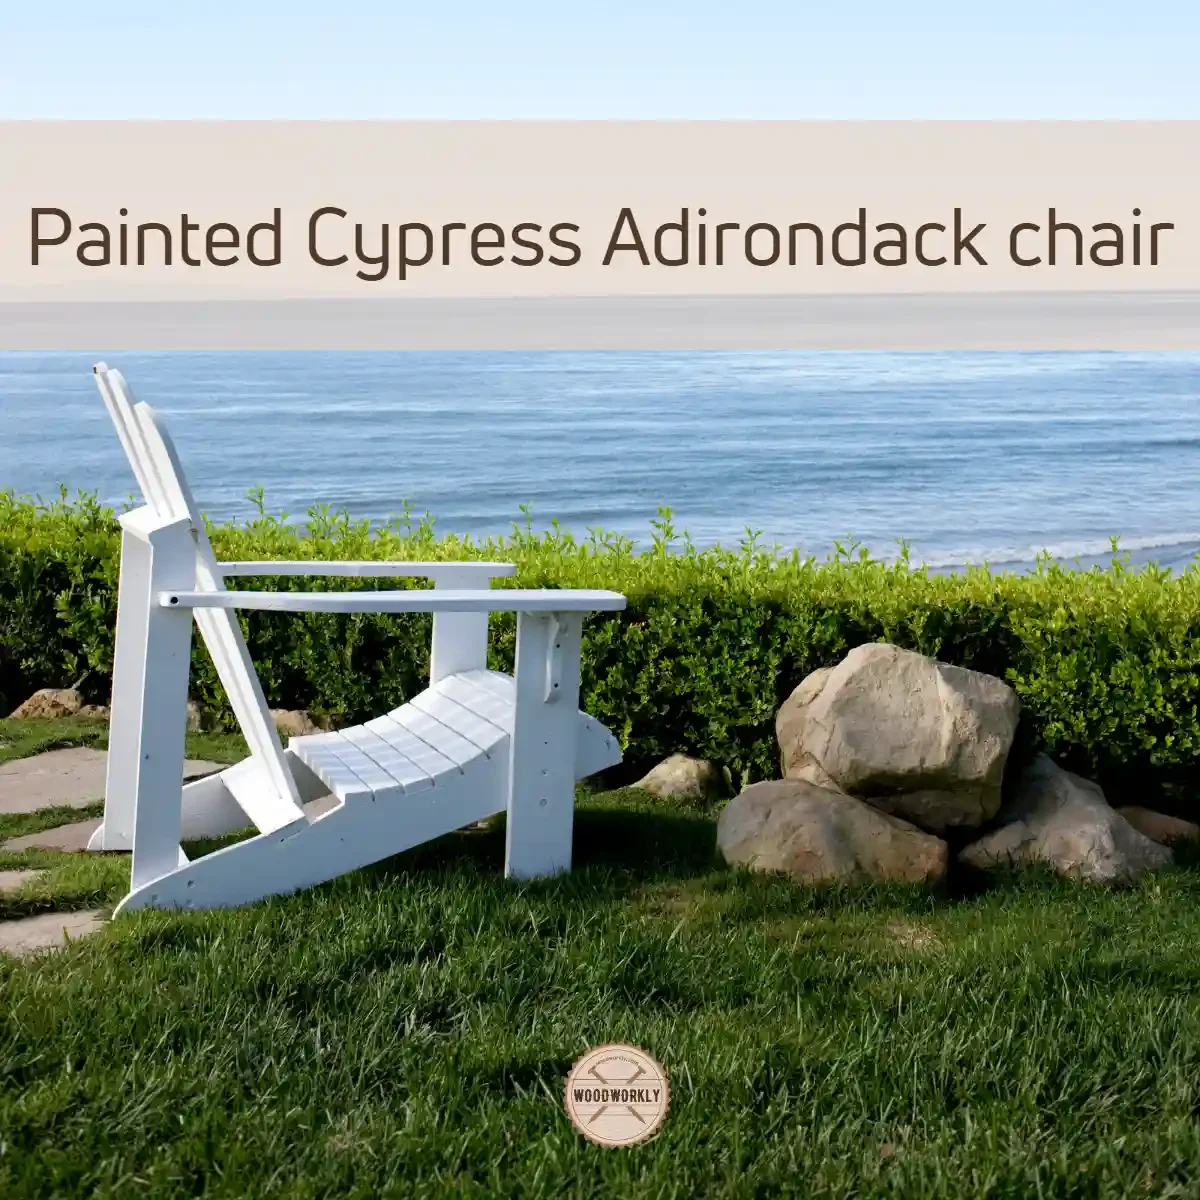 Painted Cypress Adirondack chair